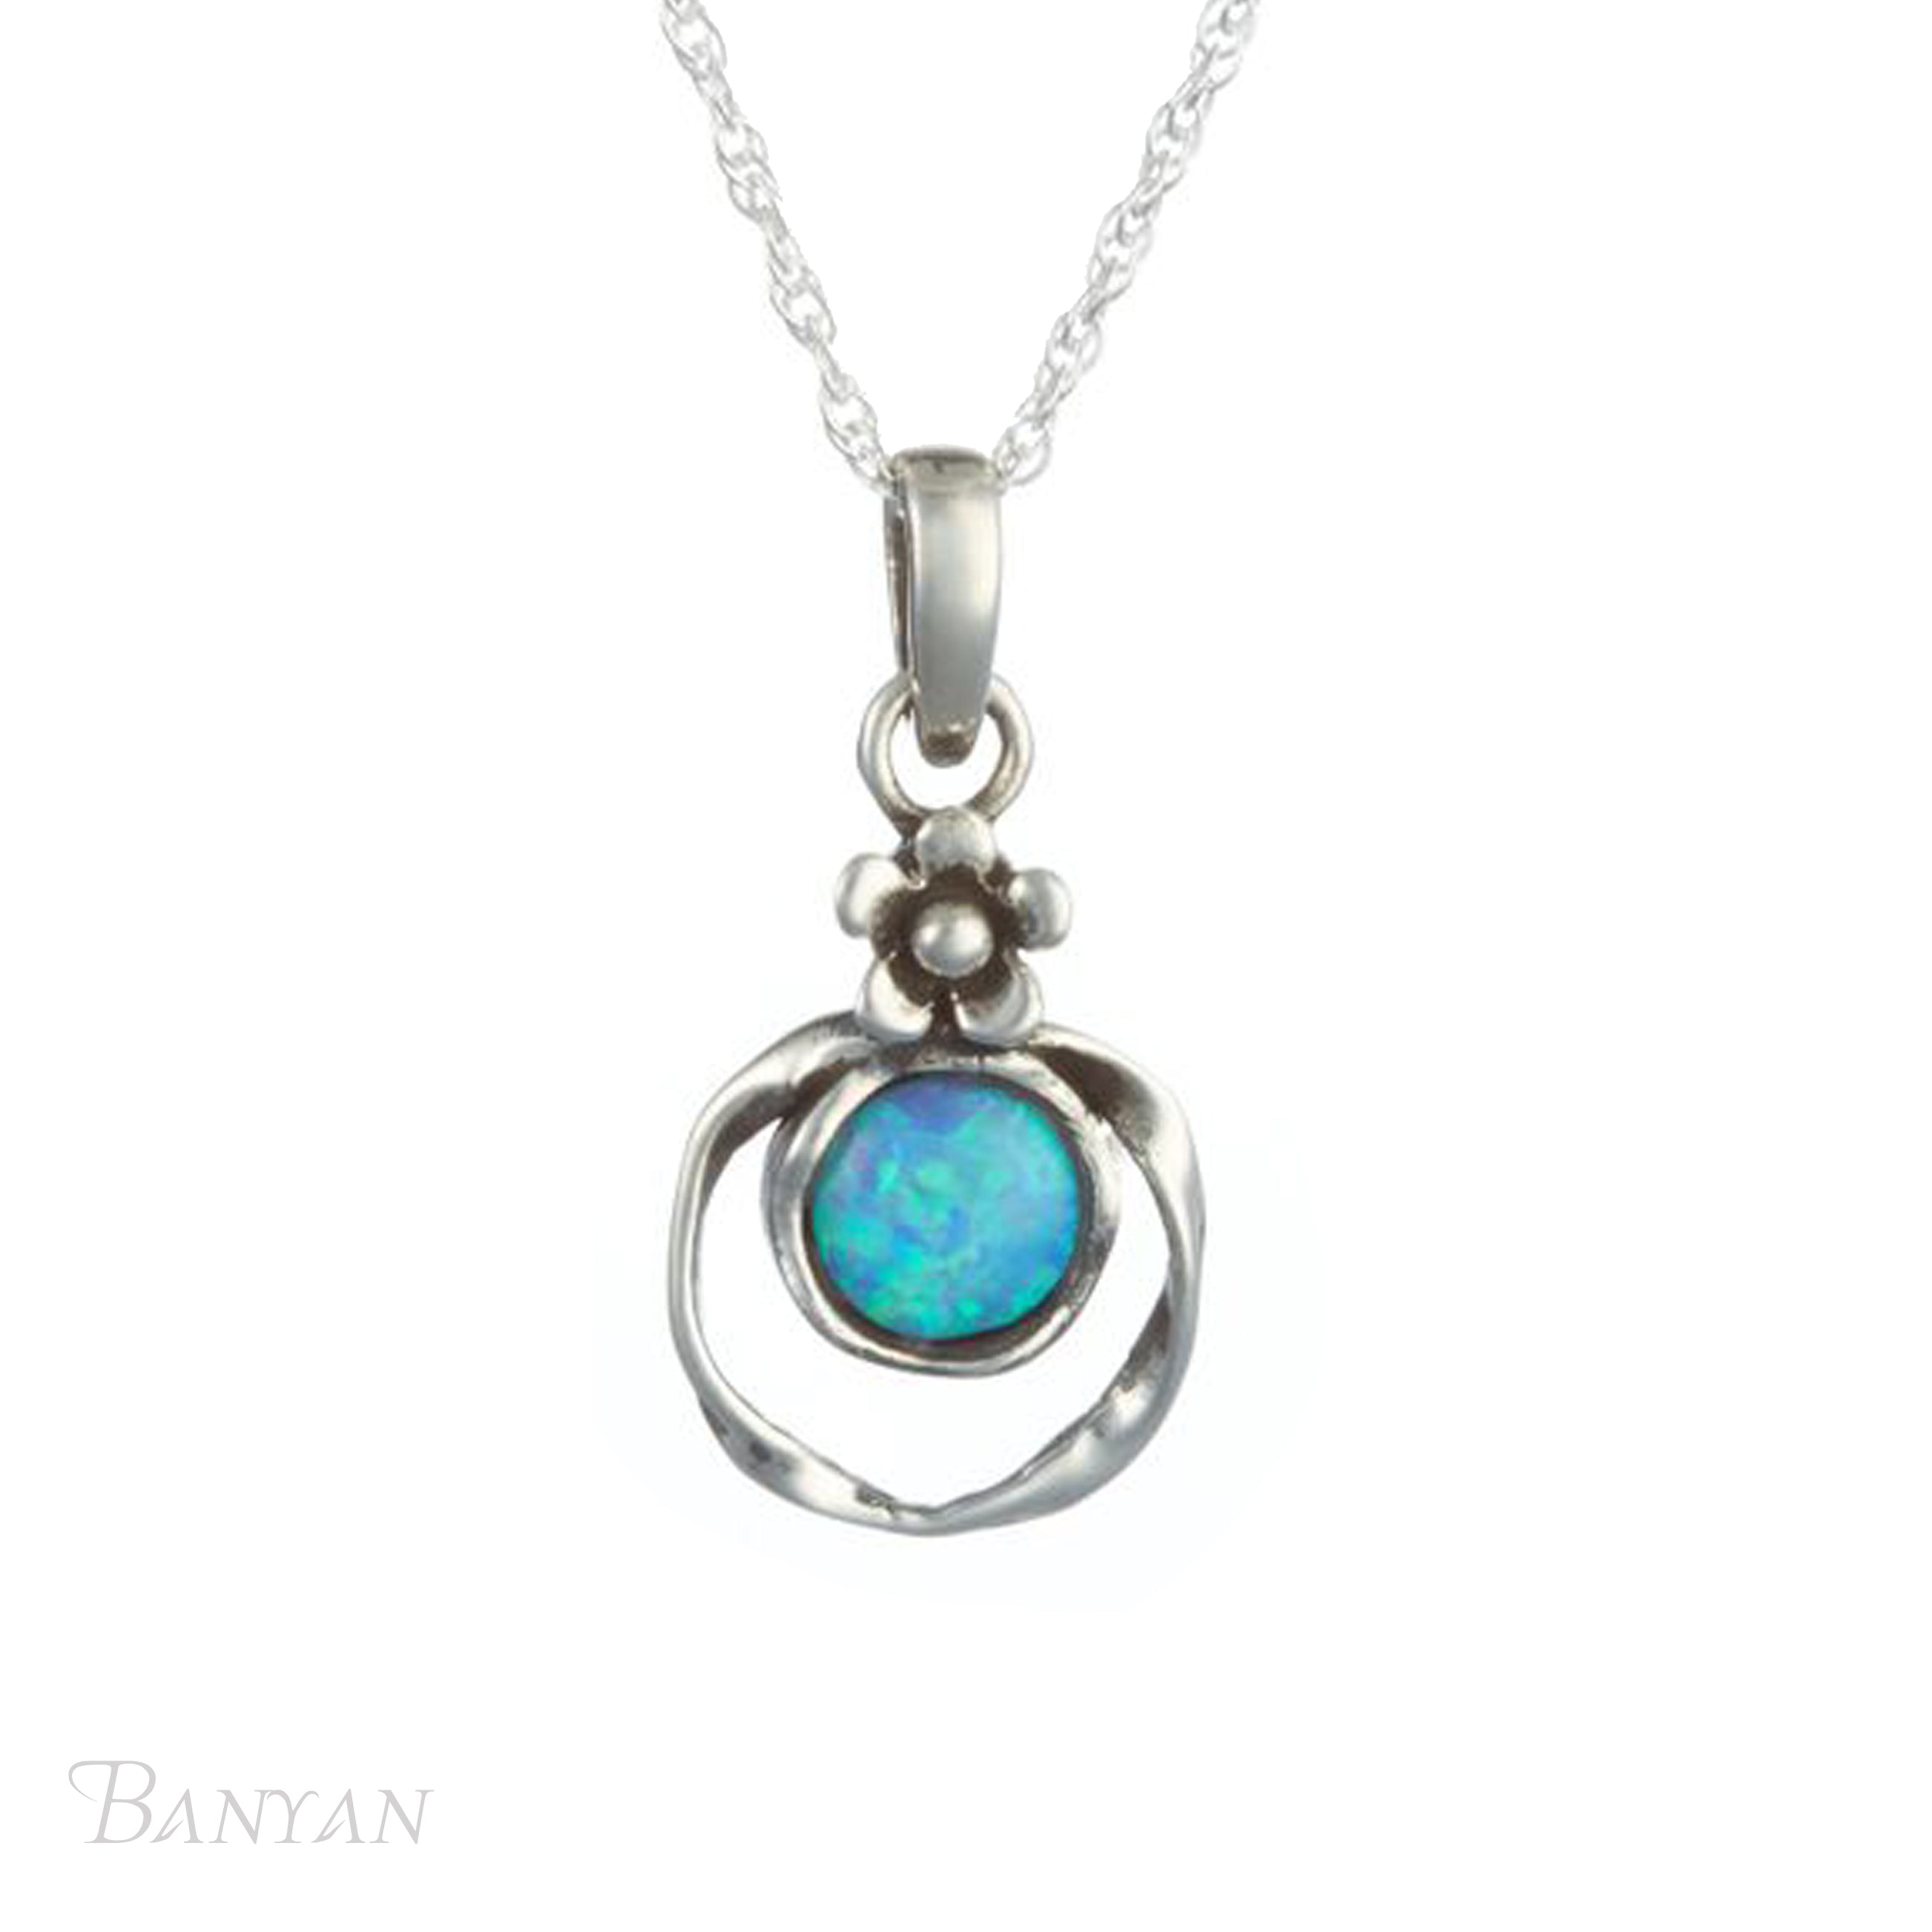 Oxidised Opal Necklace - The Nancy Smillie Shop - Art, Jewellery & Designer Gifts Glasgow